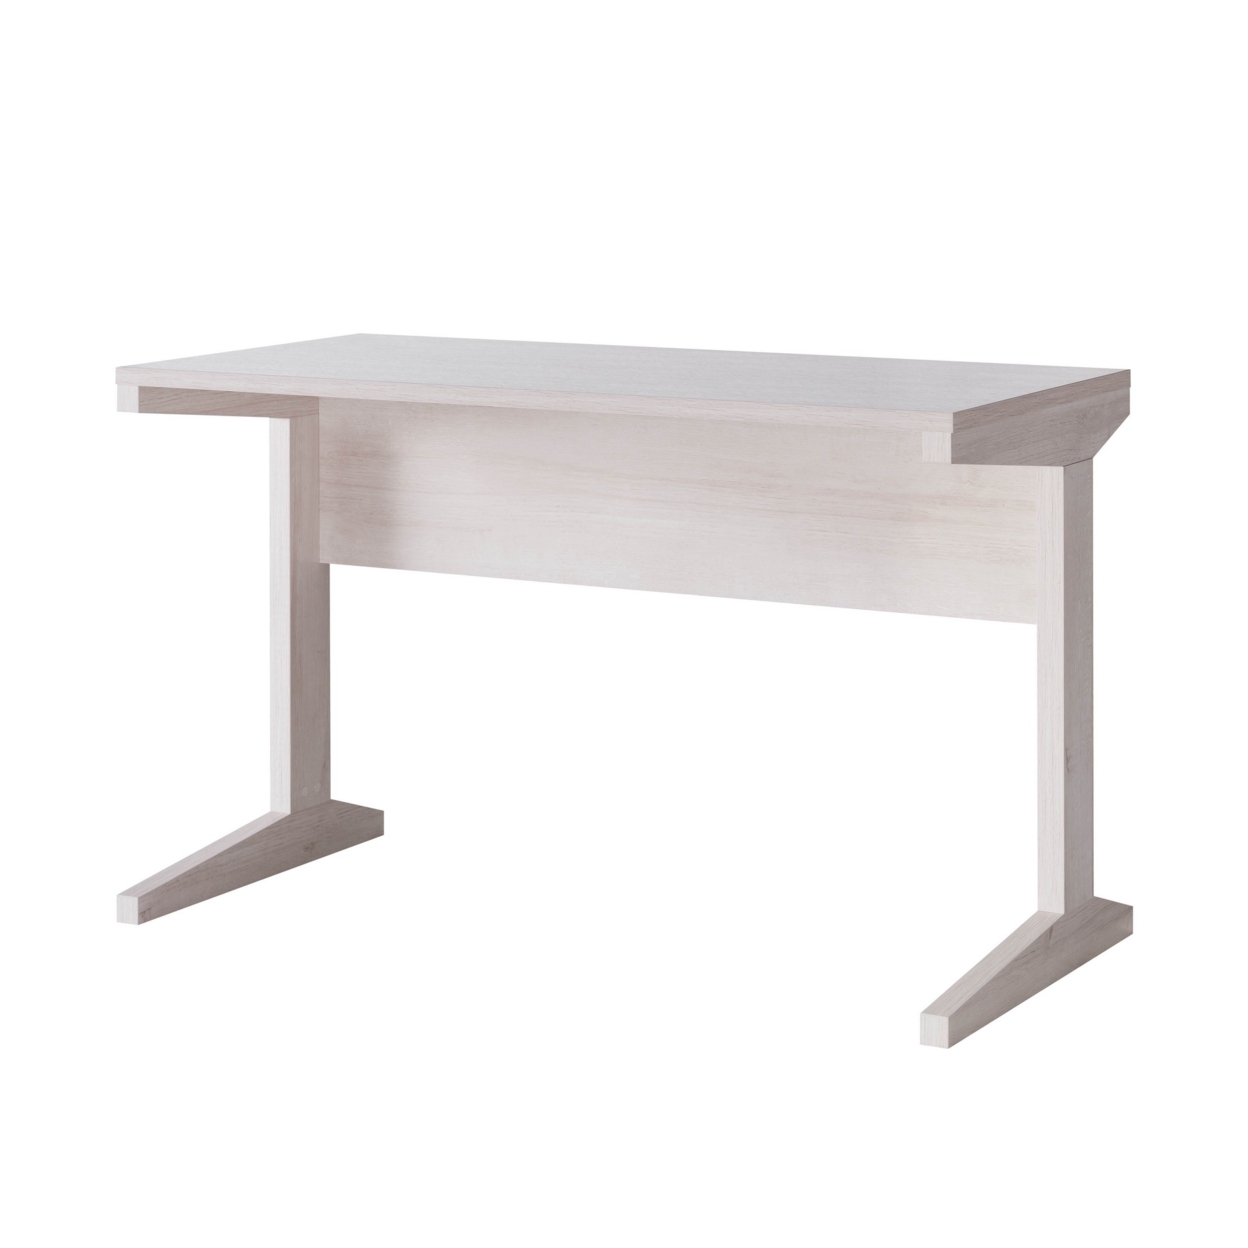 30 Inch Rectangular Wooden Desk With L Legs, White- Saltoro Sherpi